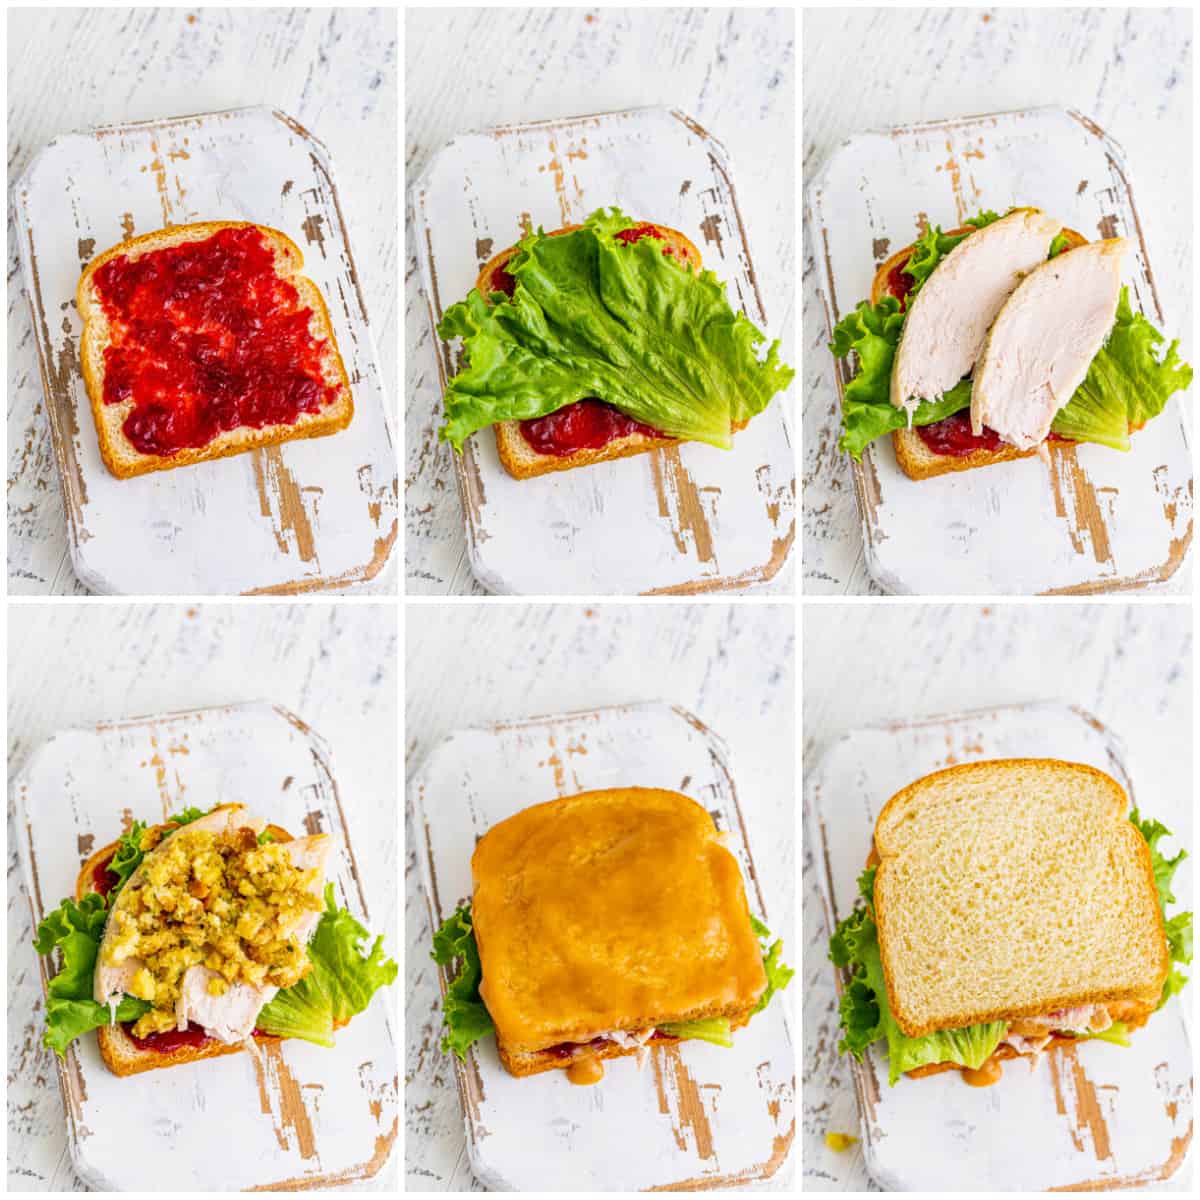 Step by step photos on how to make a Turkey Moist Maker Sandwich.